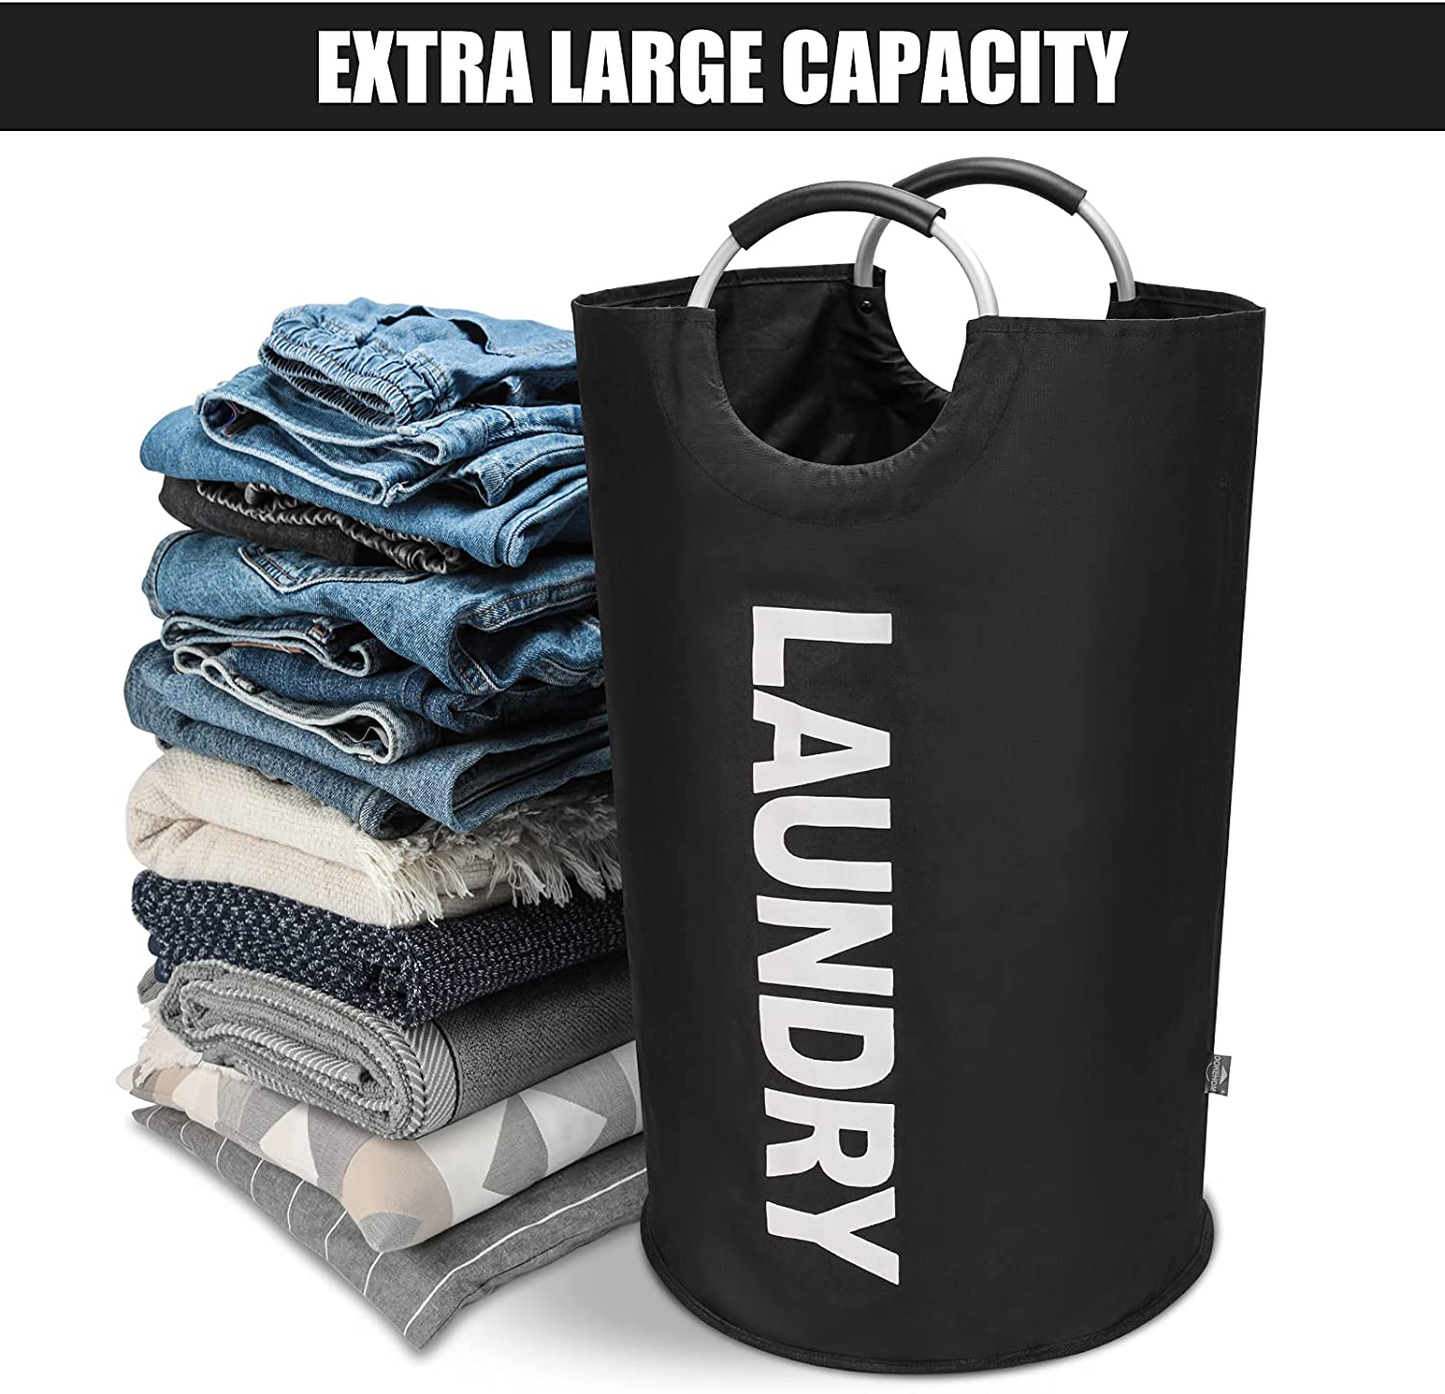 DOKEHOM 82L Large Laundry Basket (6 Colors), Collapsible Laundry Bag, Foldable Laundry Hamper, Folding Washing Bin (Black, L)